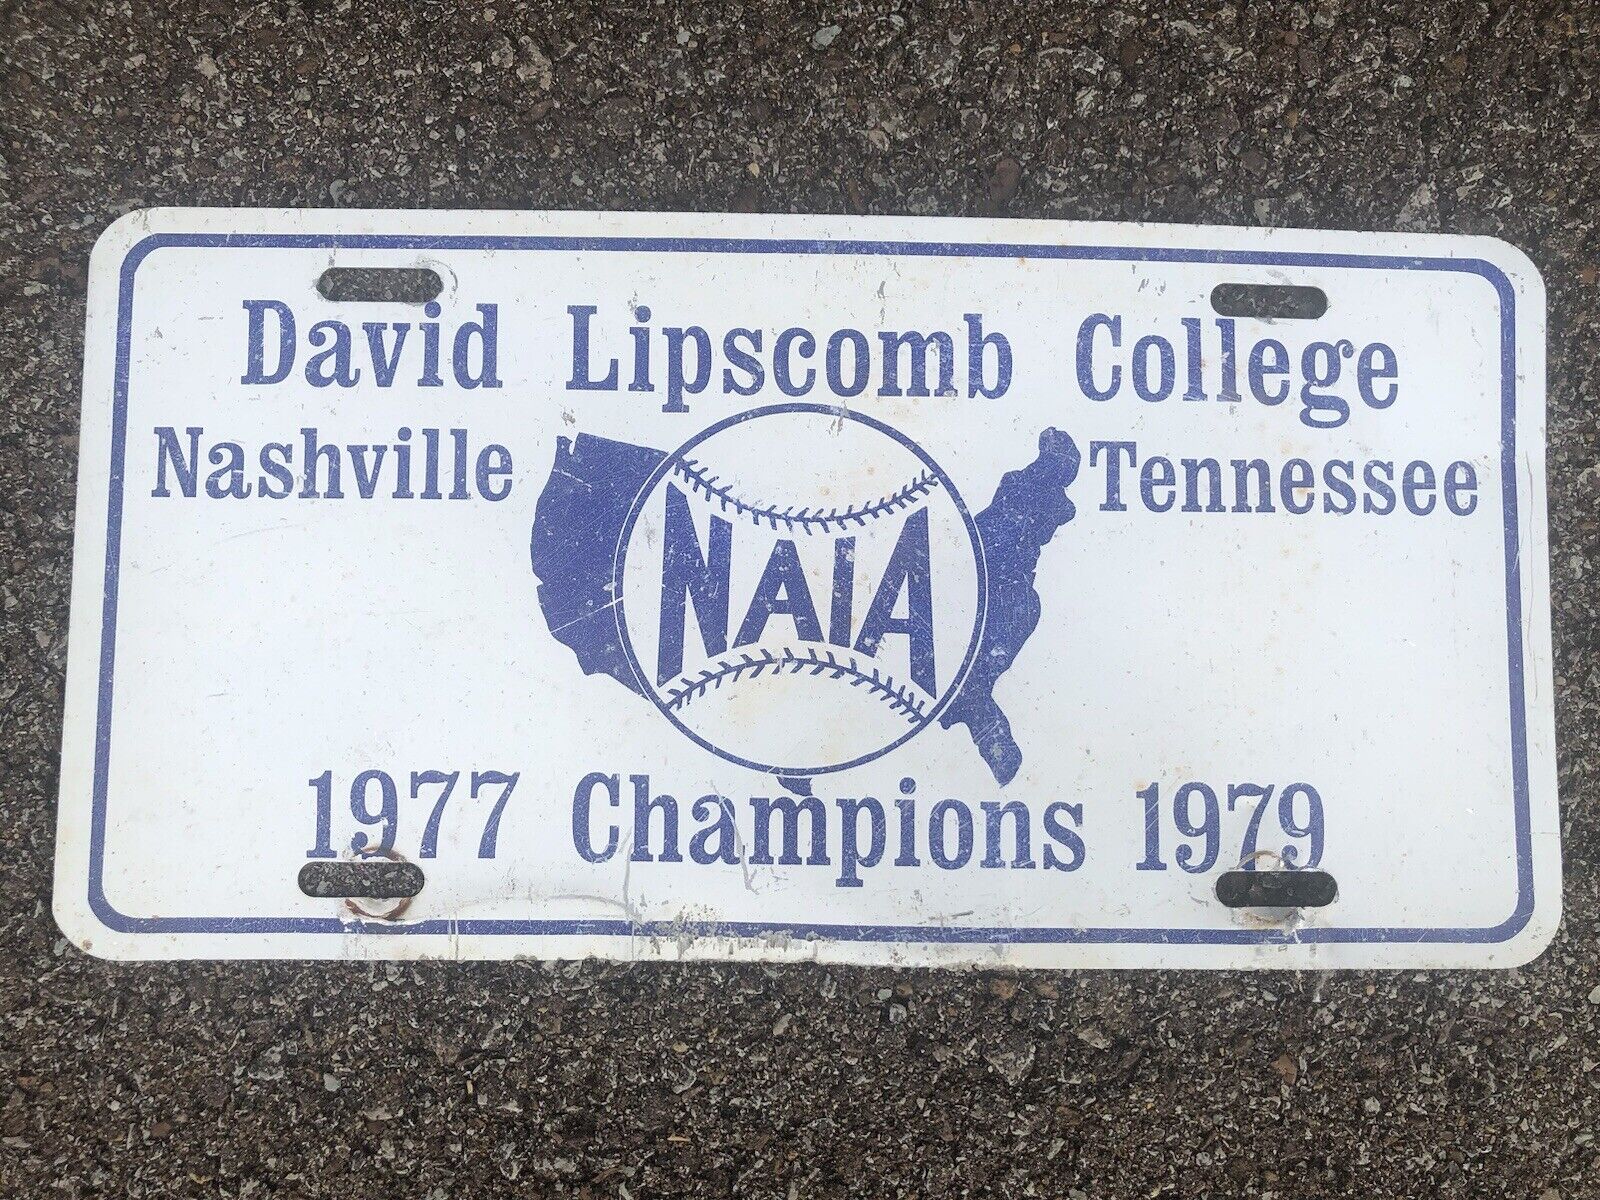 1979 Tennessee License Plate Nashville David Lipscomb NAIA Champions 1977